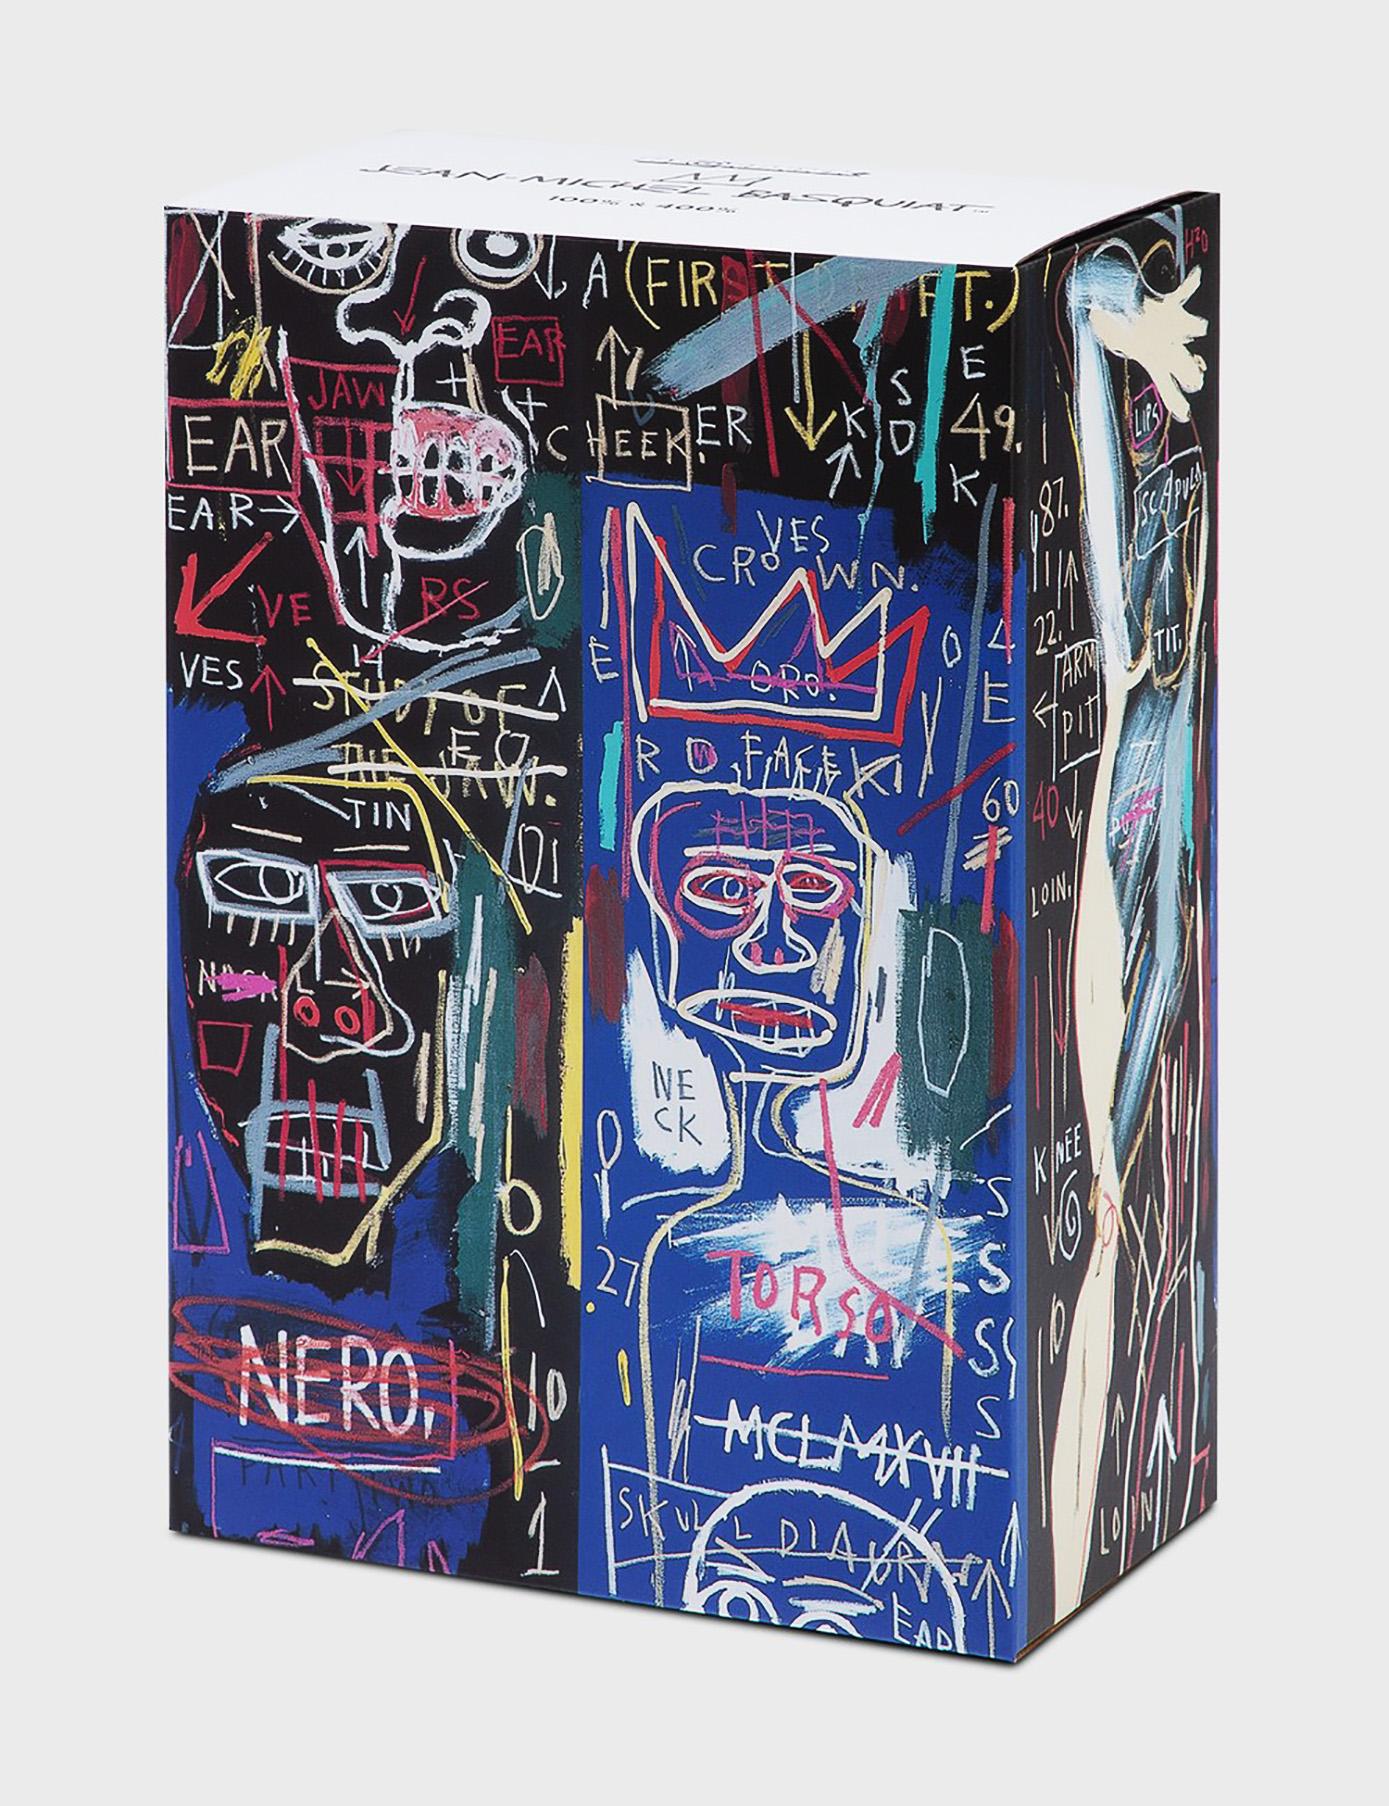 Basquiat Bearbrick 1000%: set of 2 works (Basquiat BE@RBRICK) - Pop Art Sculpture by after Jean-Michel Basquiat